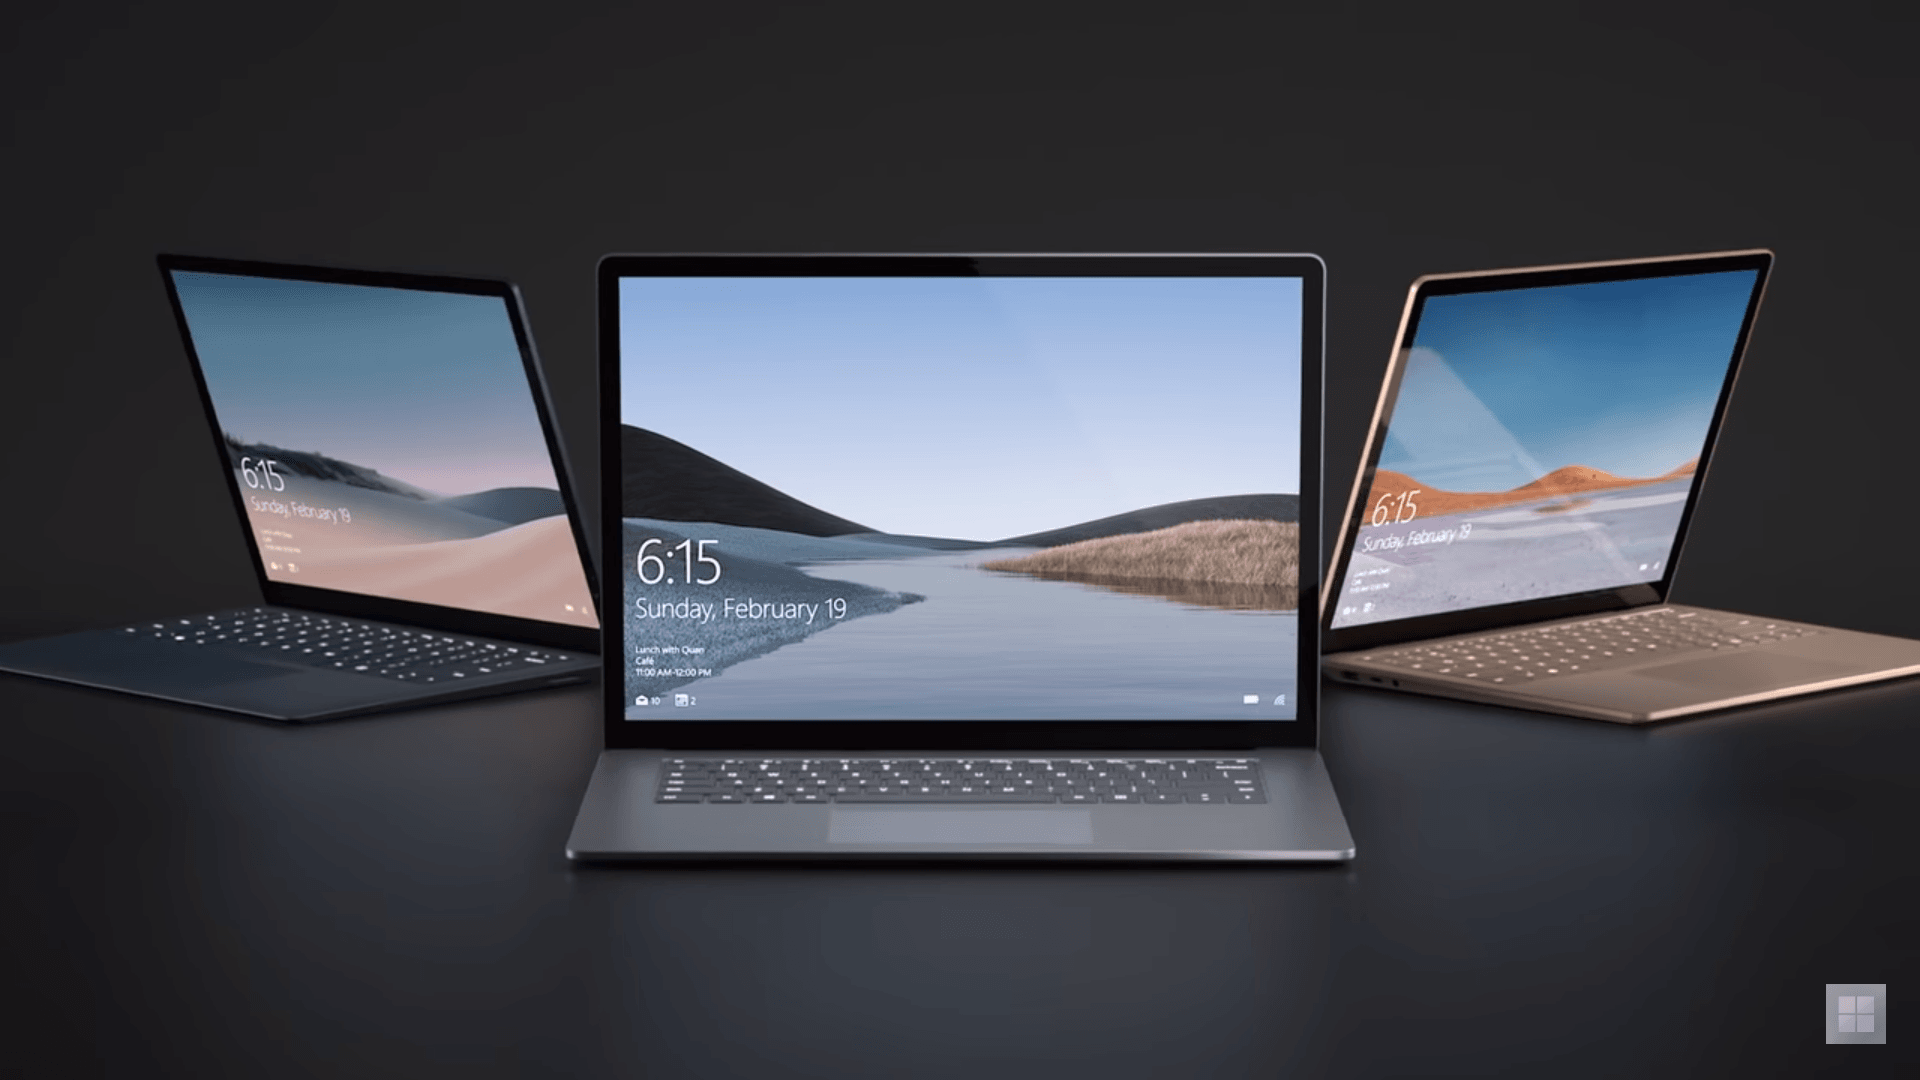 Surface Laptop 3 vs MacBook Air